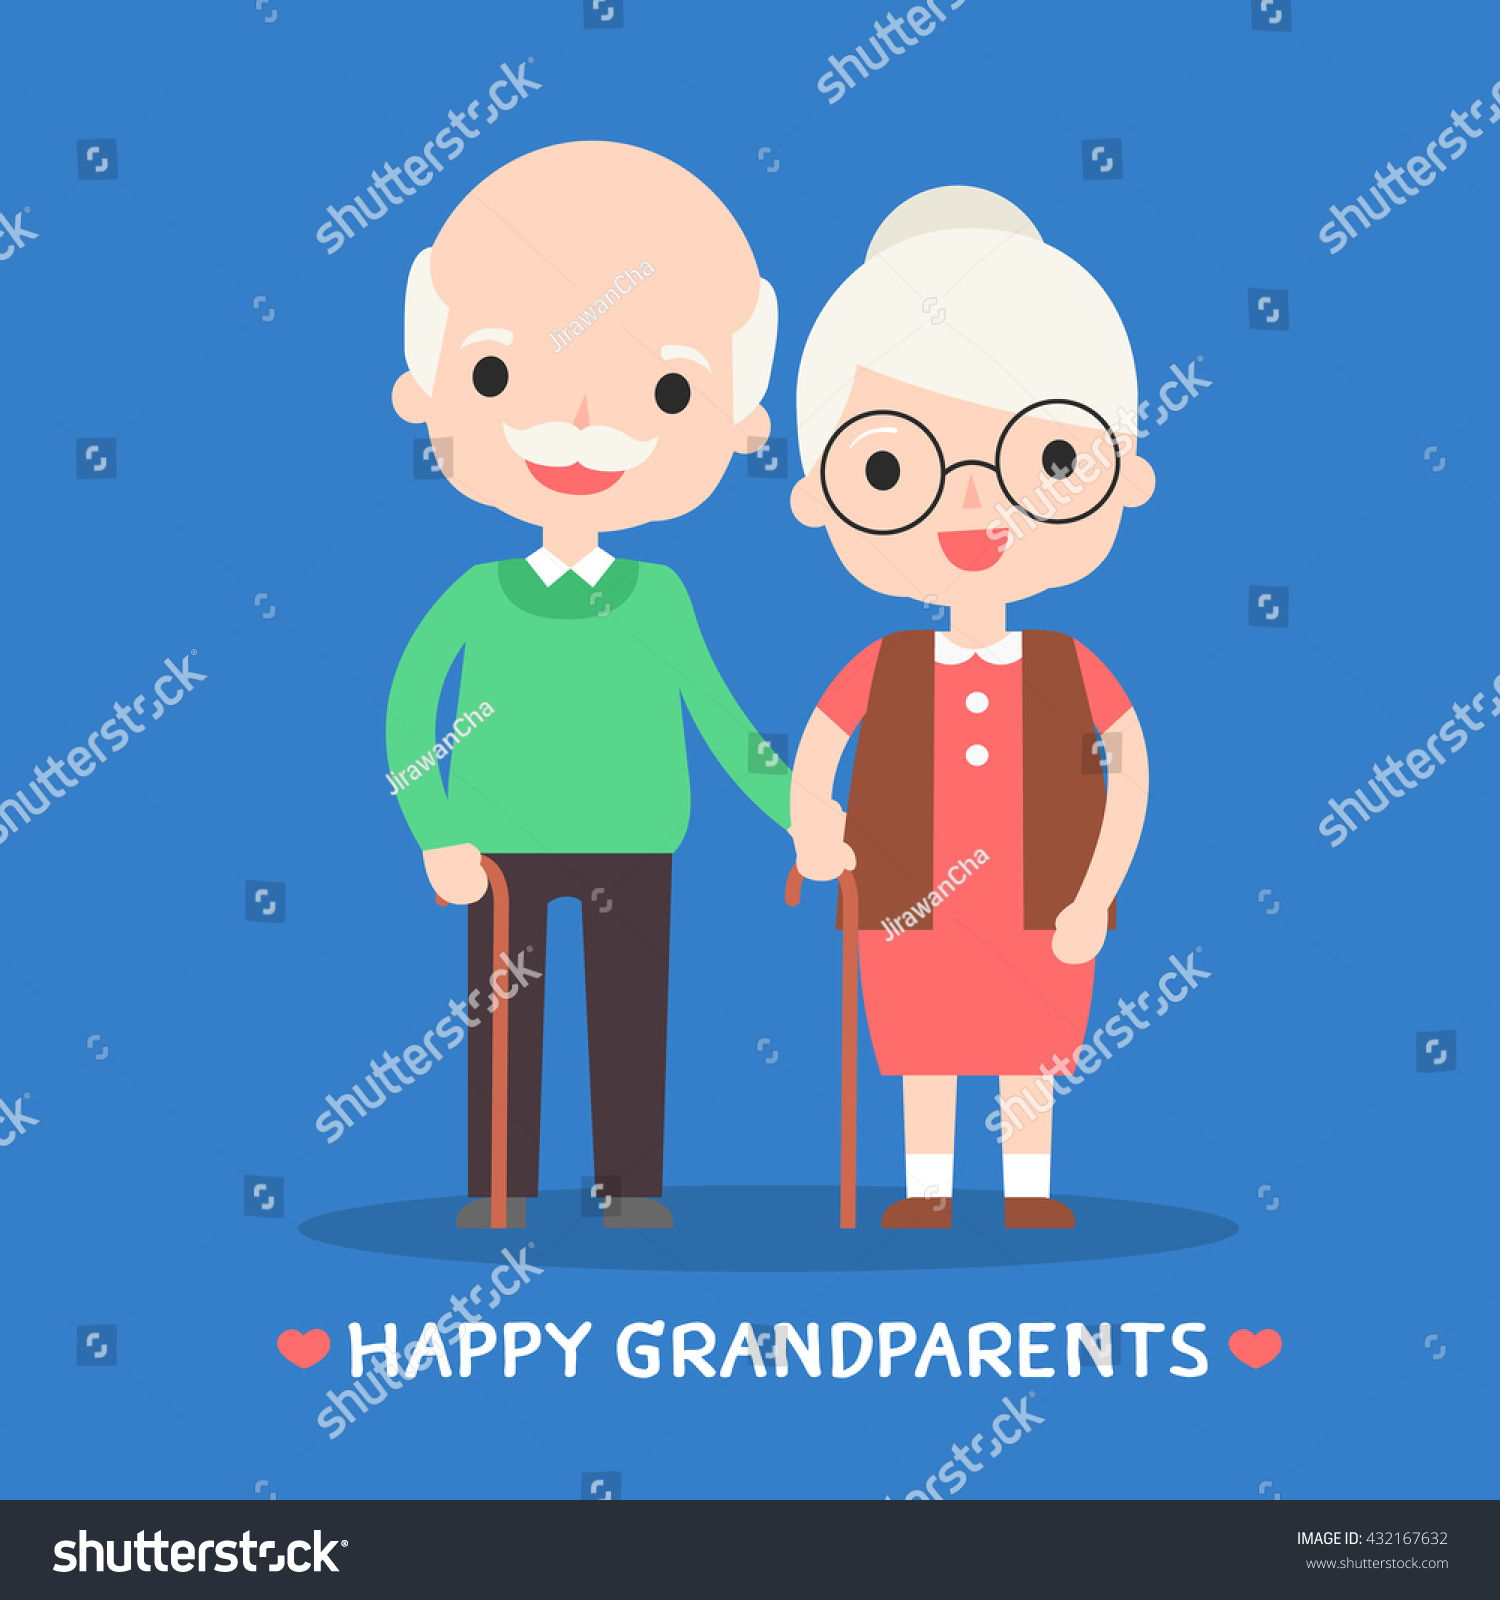 Illustration Of Happy Grandparents - 432167632 : Shutterstock